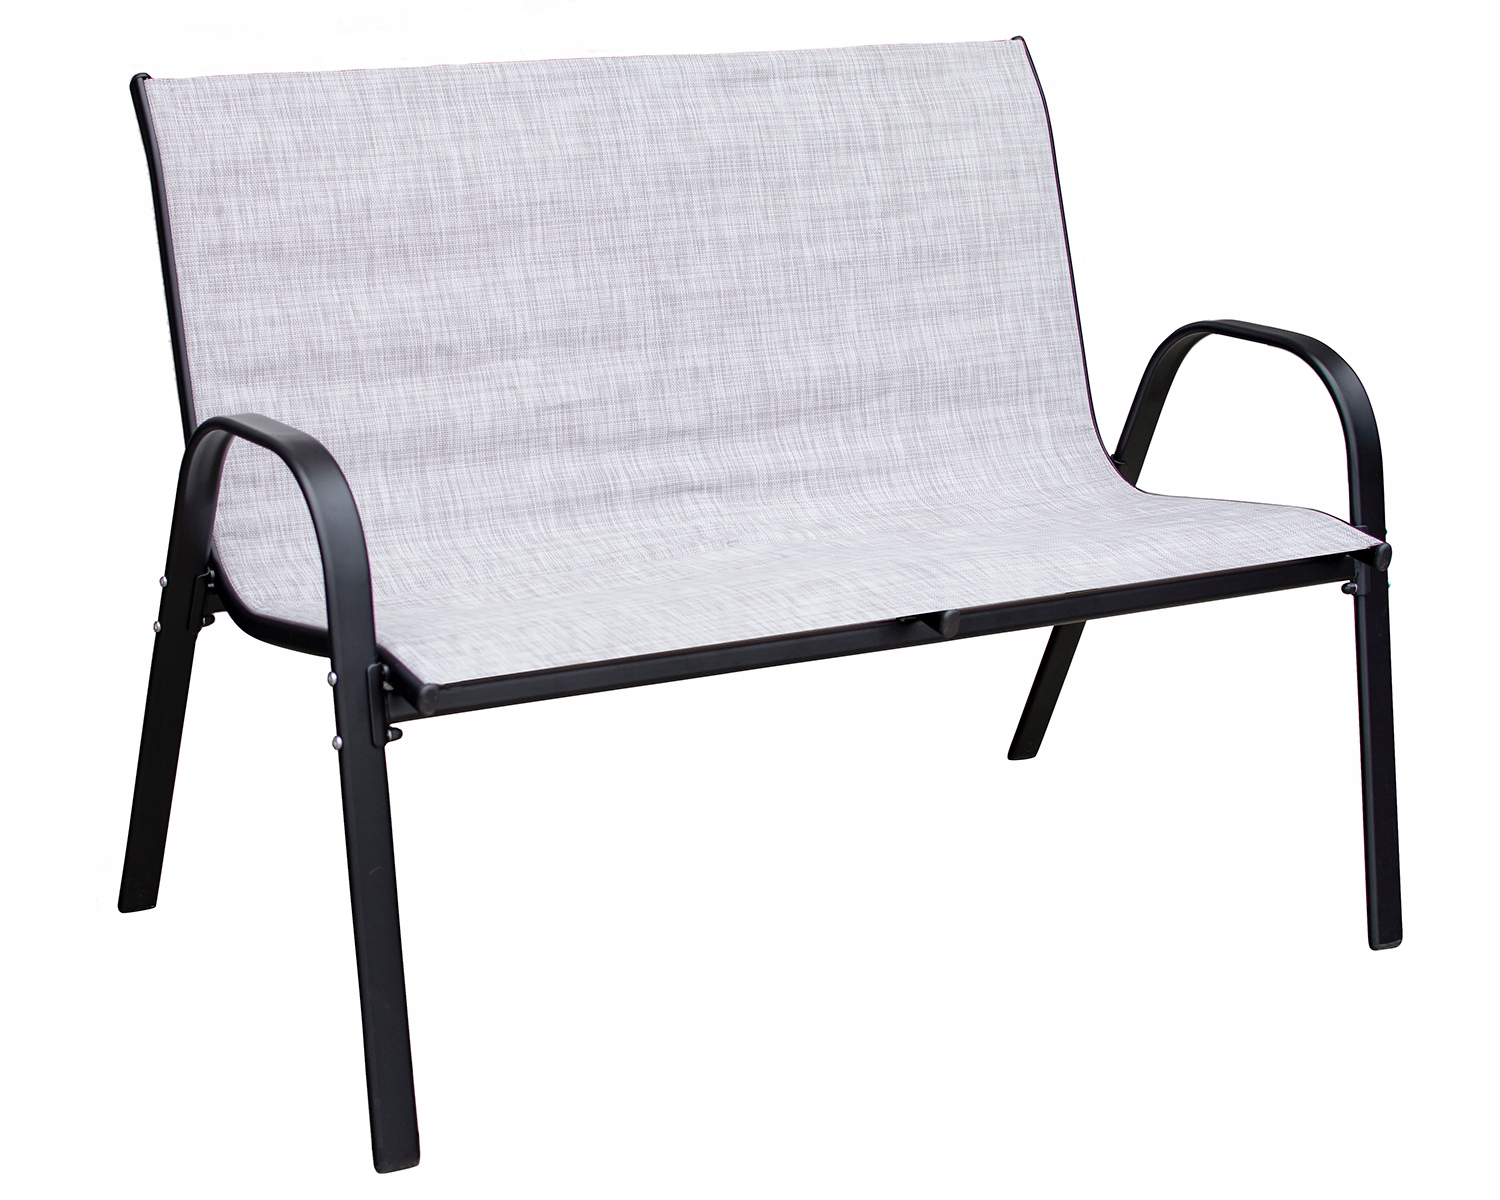 MEBLE OGRODOWE taras zestaw komplet stół krzesł, , OM-968059.5900410968059, Producent Jumi